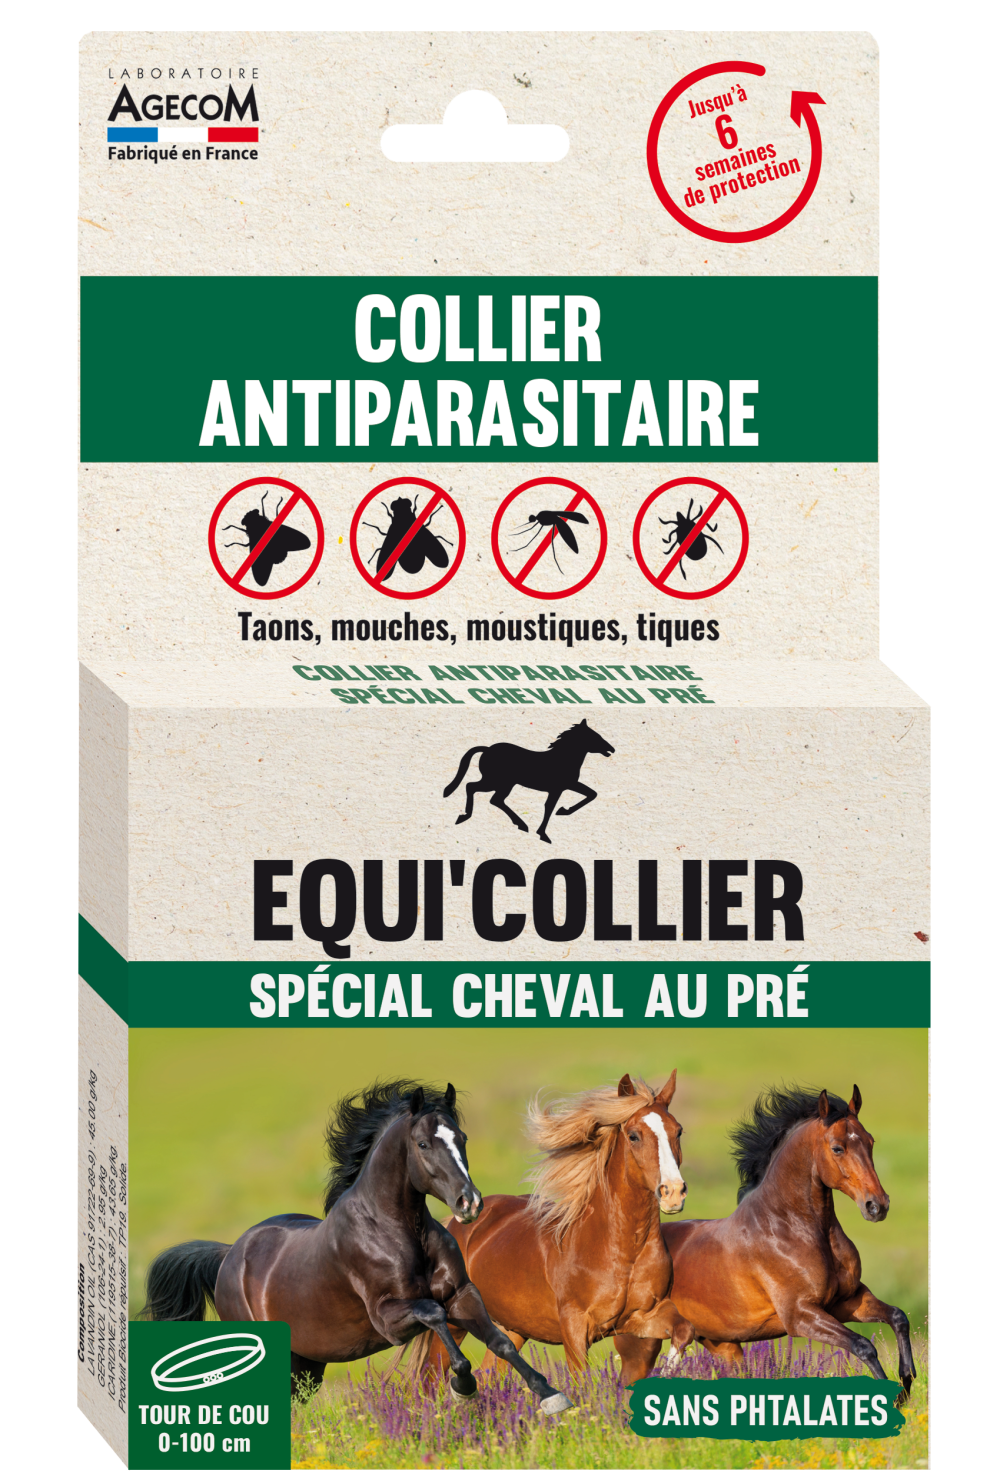 EQUI COLLIER Collier anti insectes pour chevaux